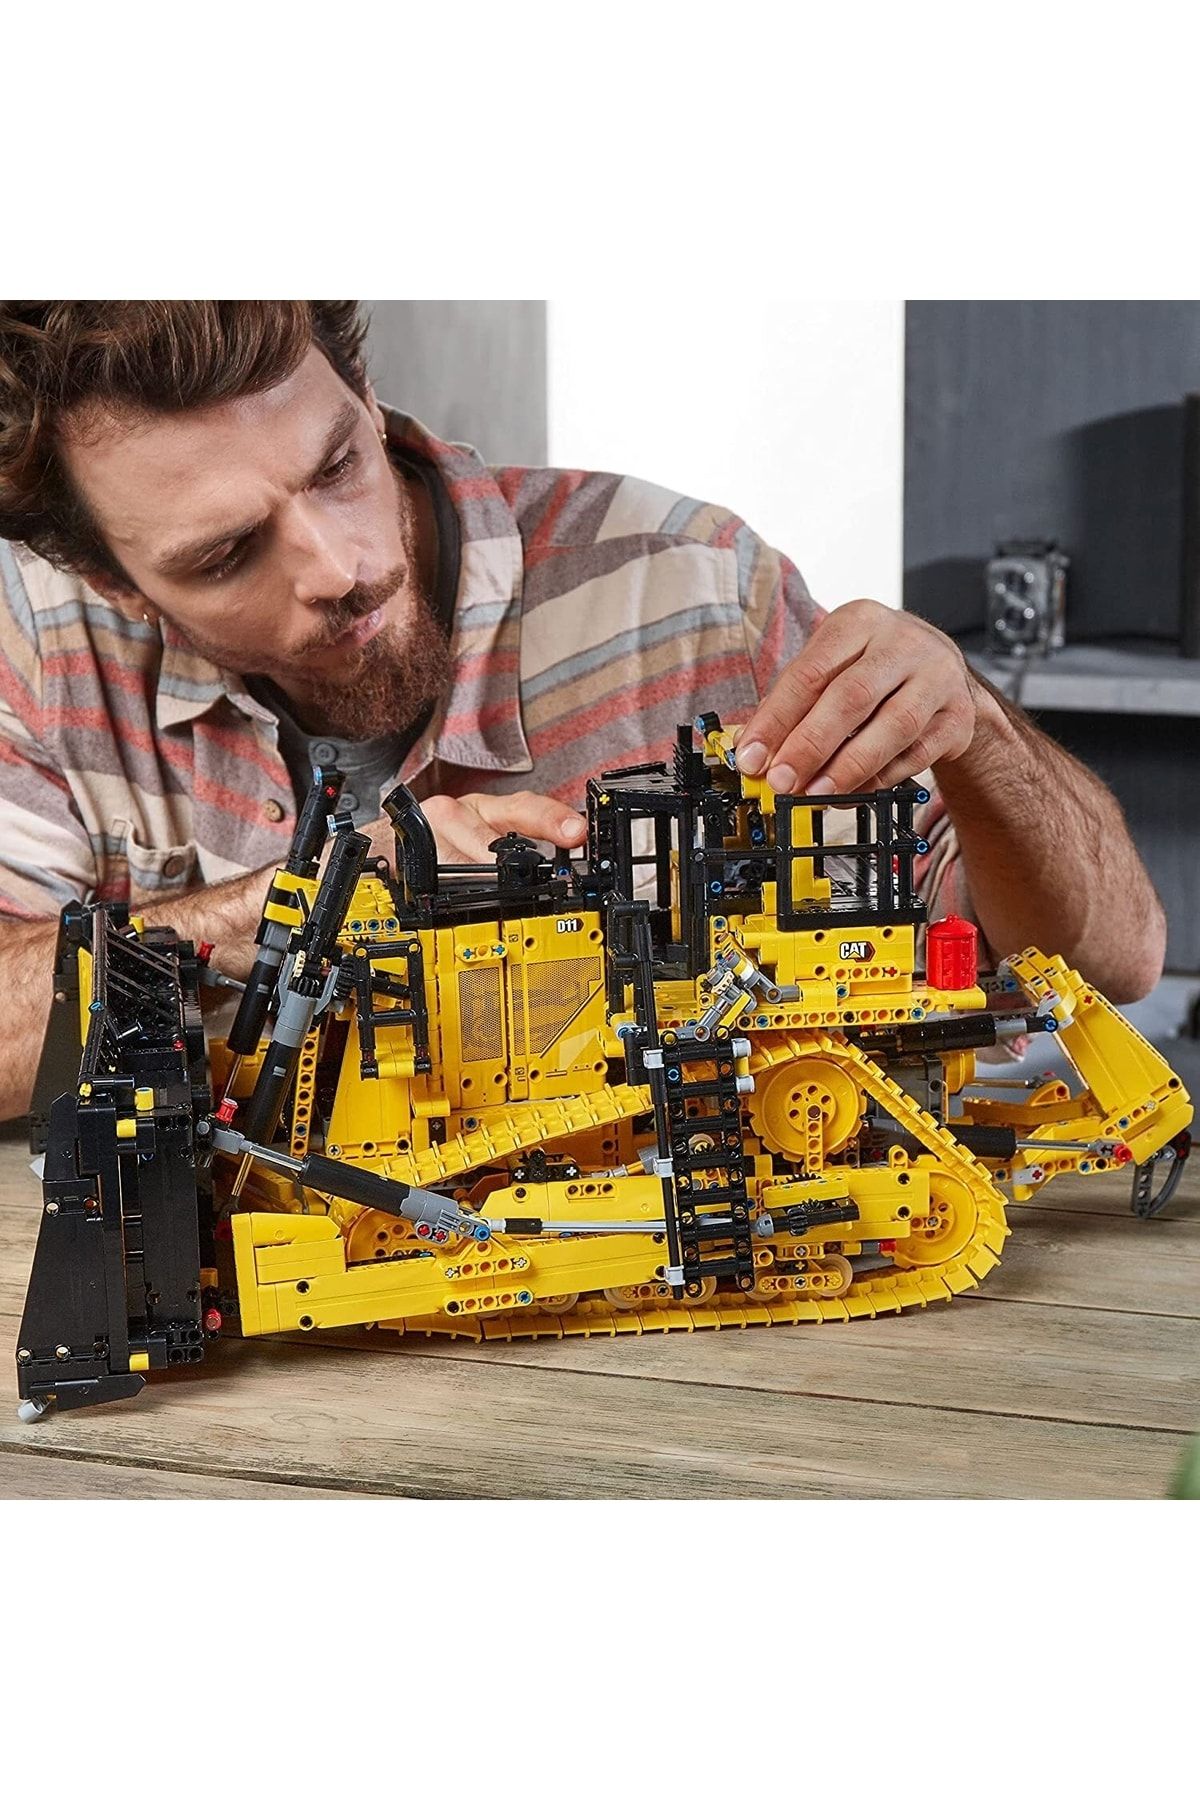 LEGO لگو Technic Cat D11t Buldozer 42131 کپی یک ماشین ساختمانی نمادین برای بزرگسالان است.